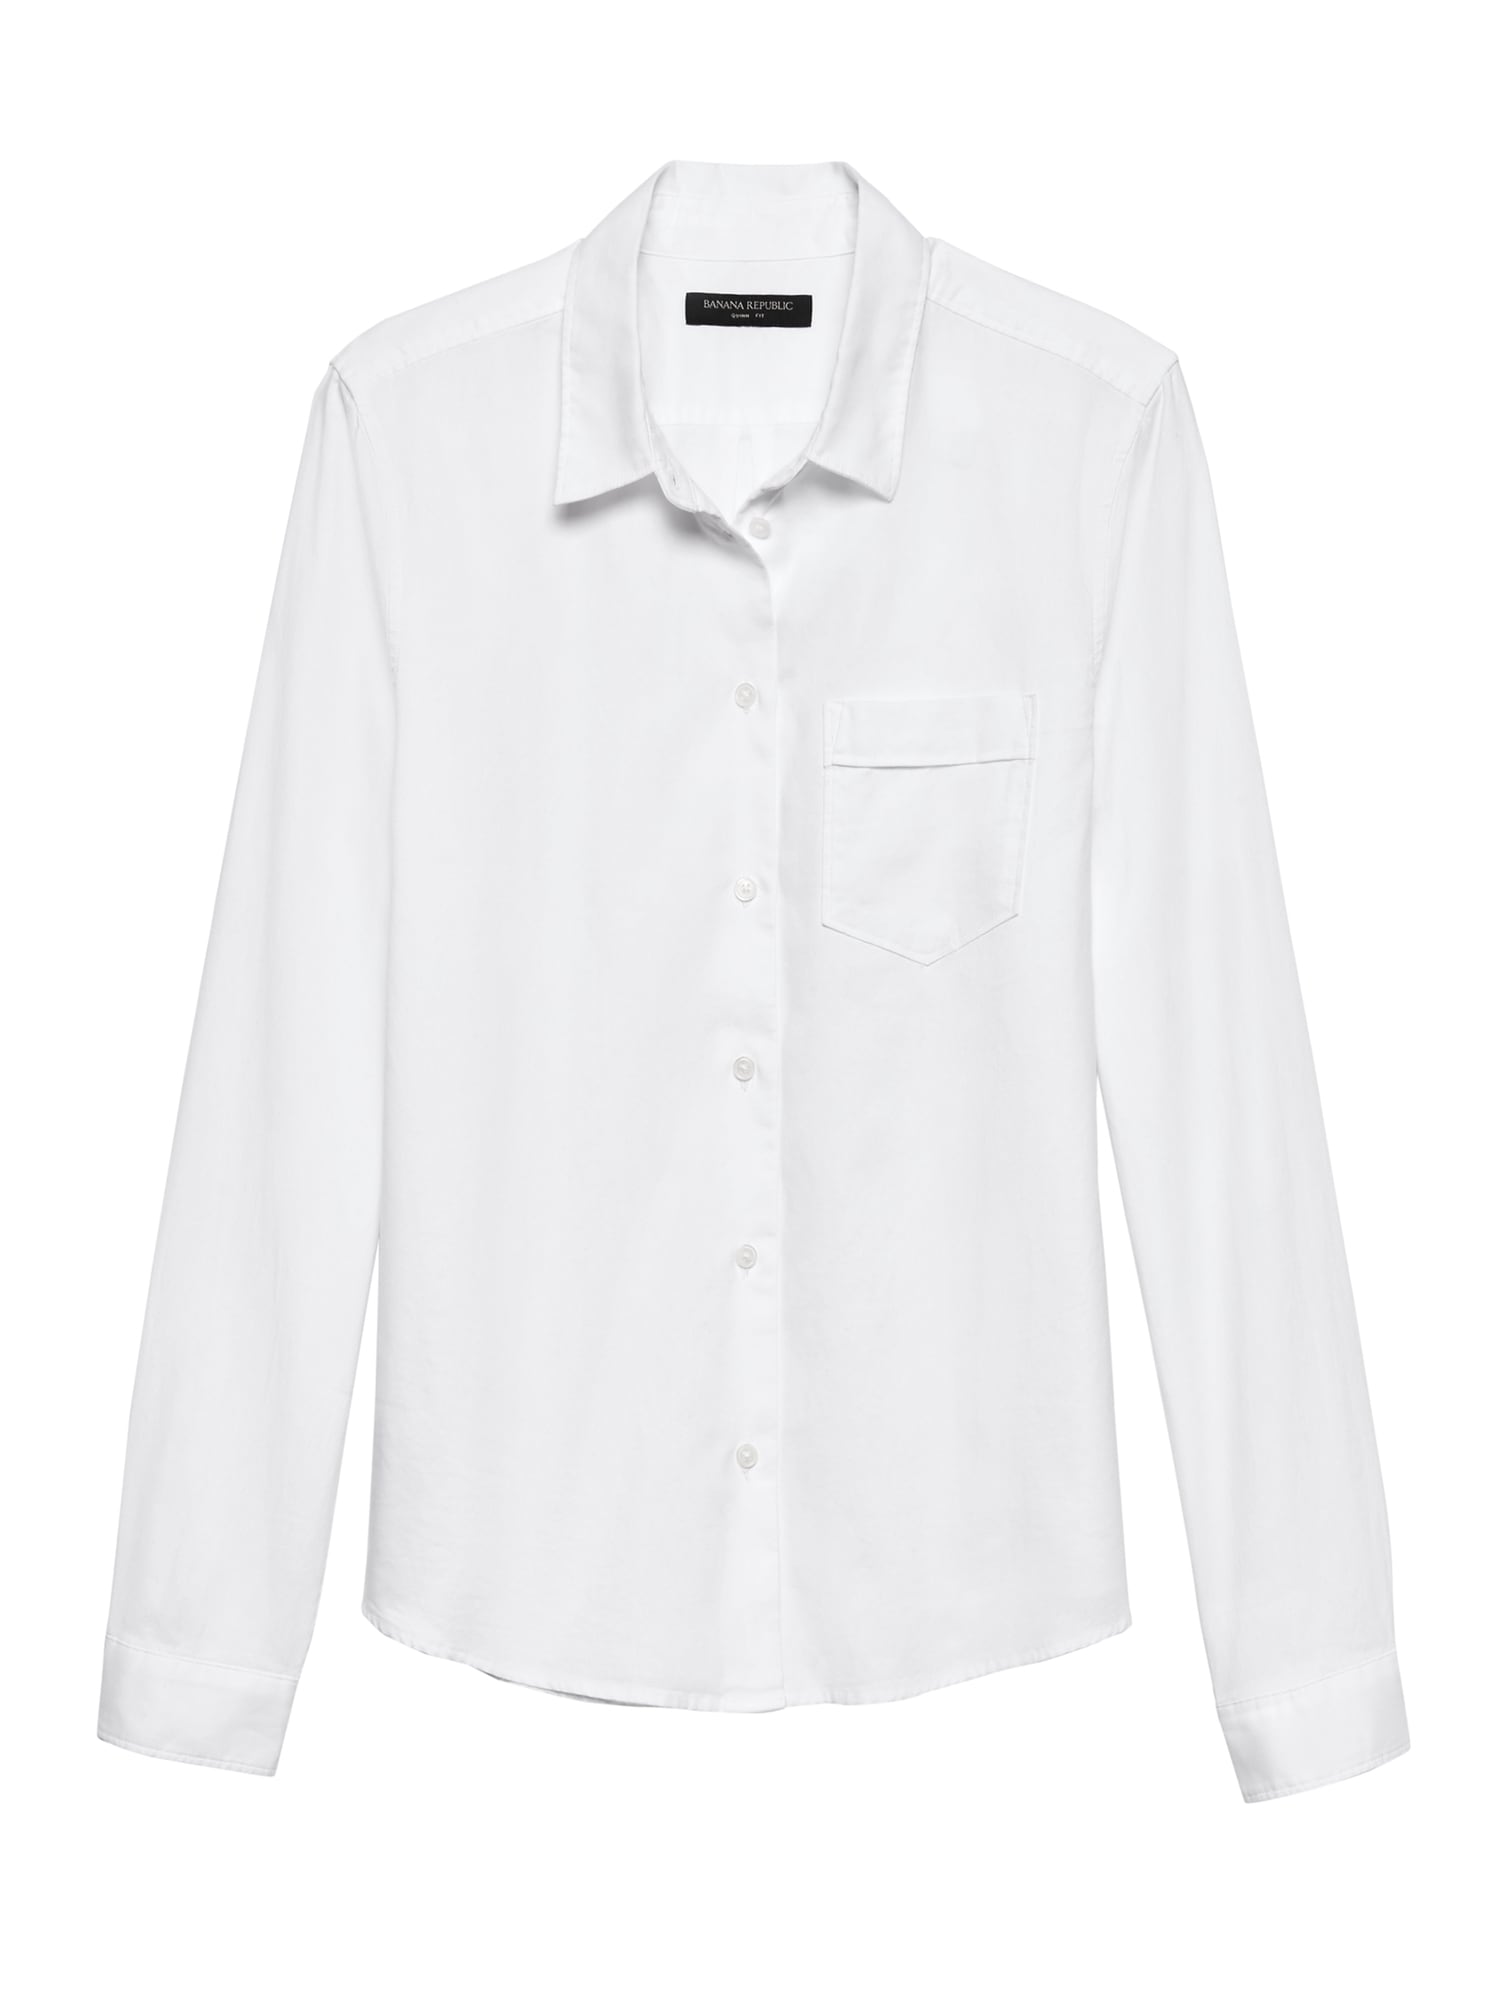 Banana Republic Quinn Straight-Fix Oxford Shirt in White